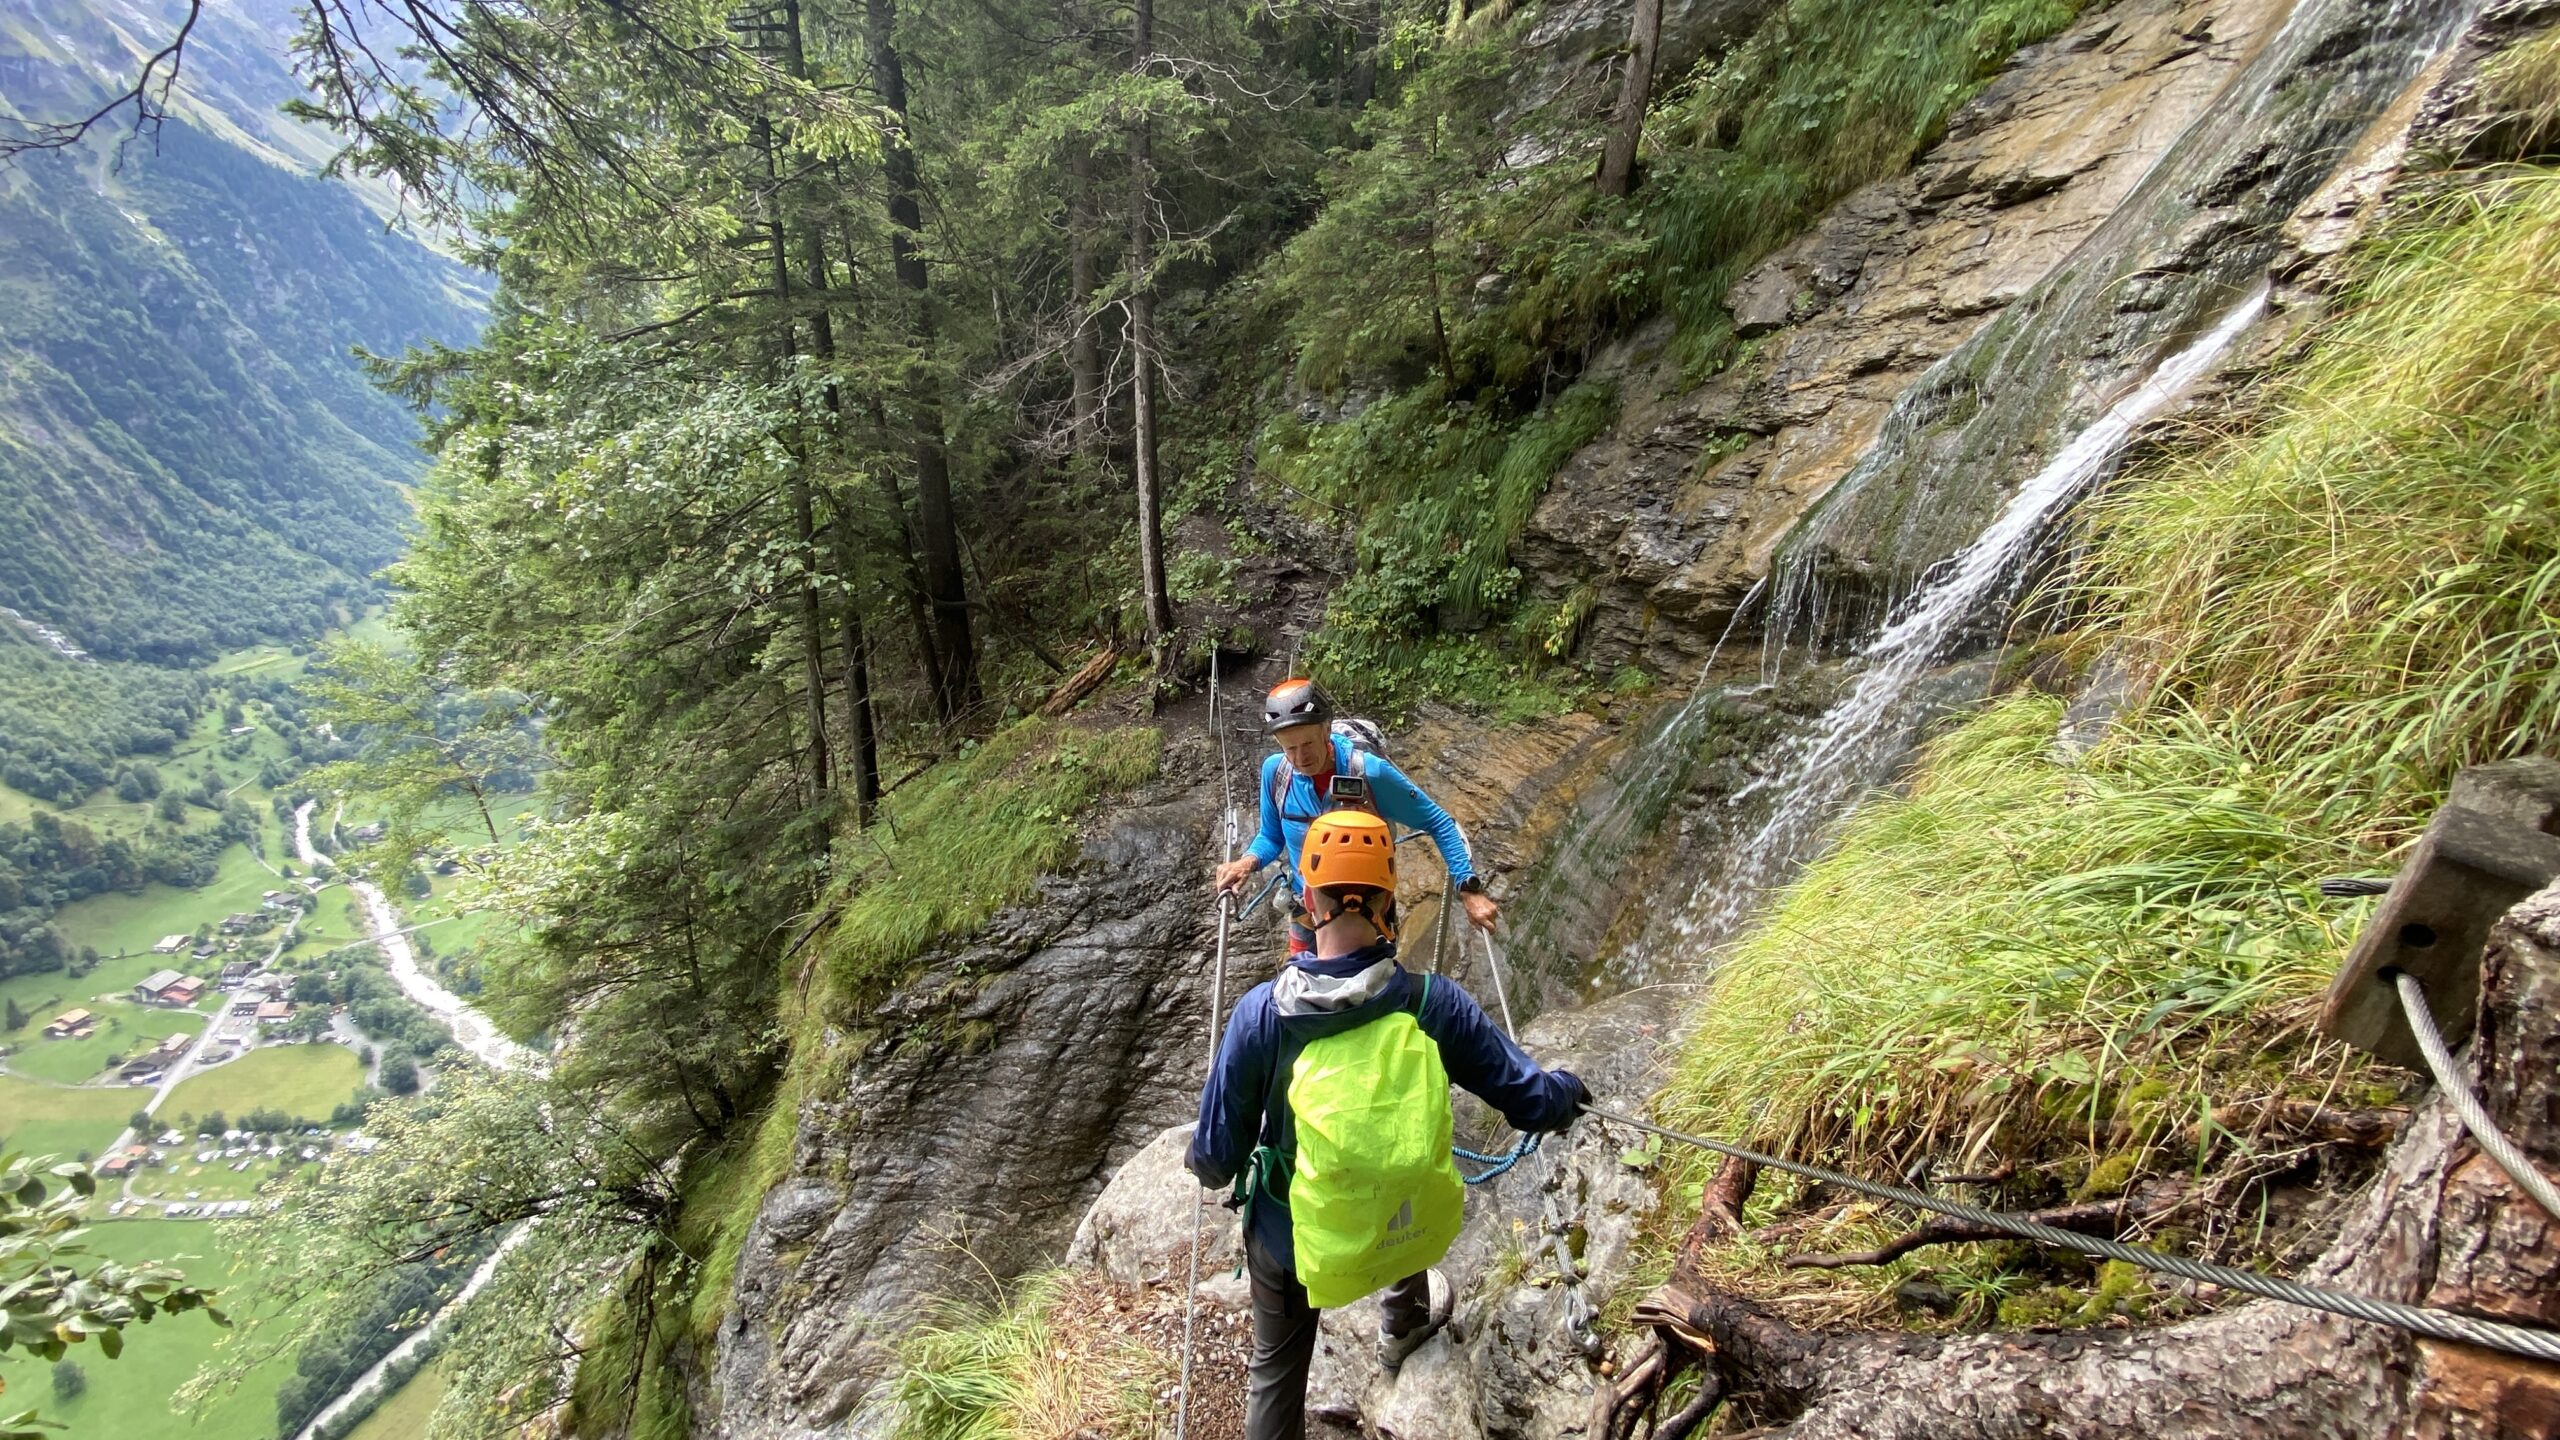 Via ferrata Mürren guide crossing the tightrope over a waterfall